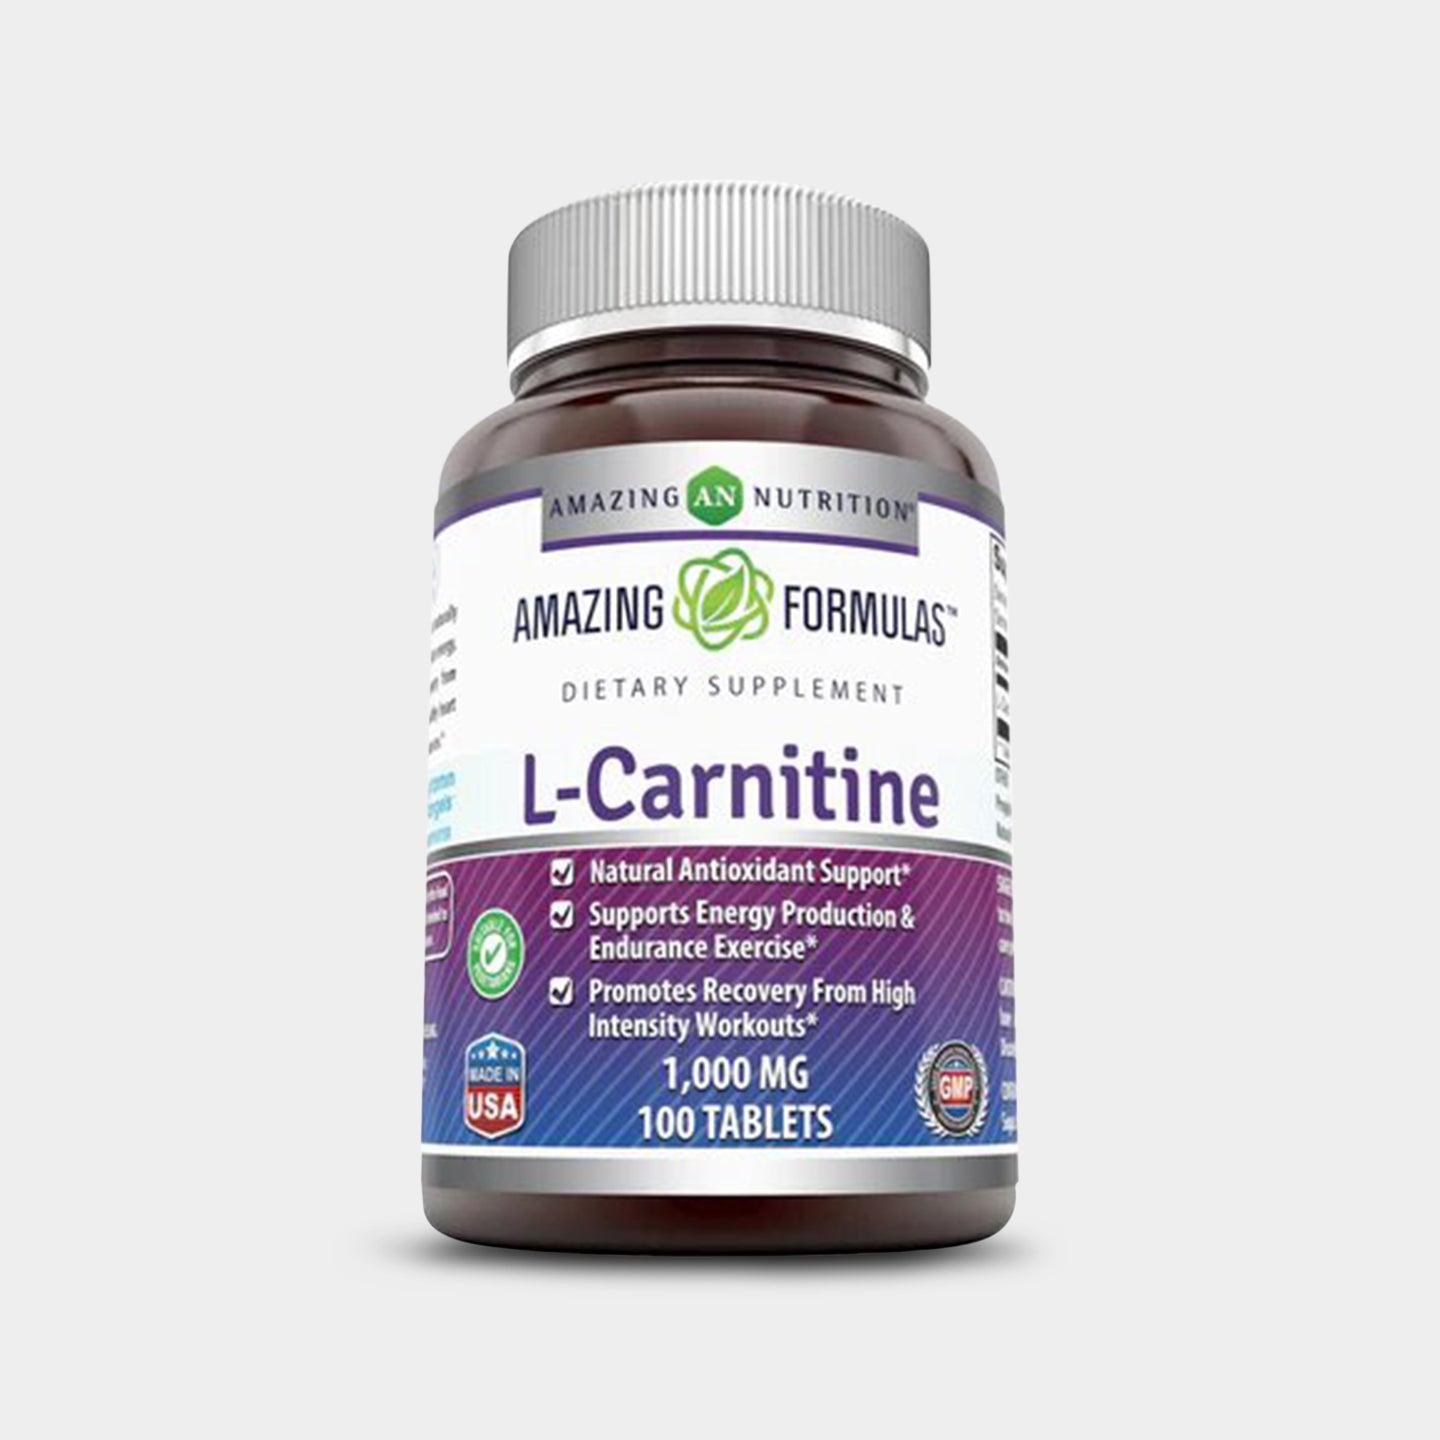 Amazing Nutrition Amazing Formulas L-Carnitine 1000 Mg